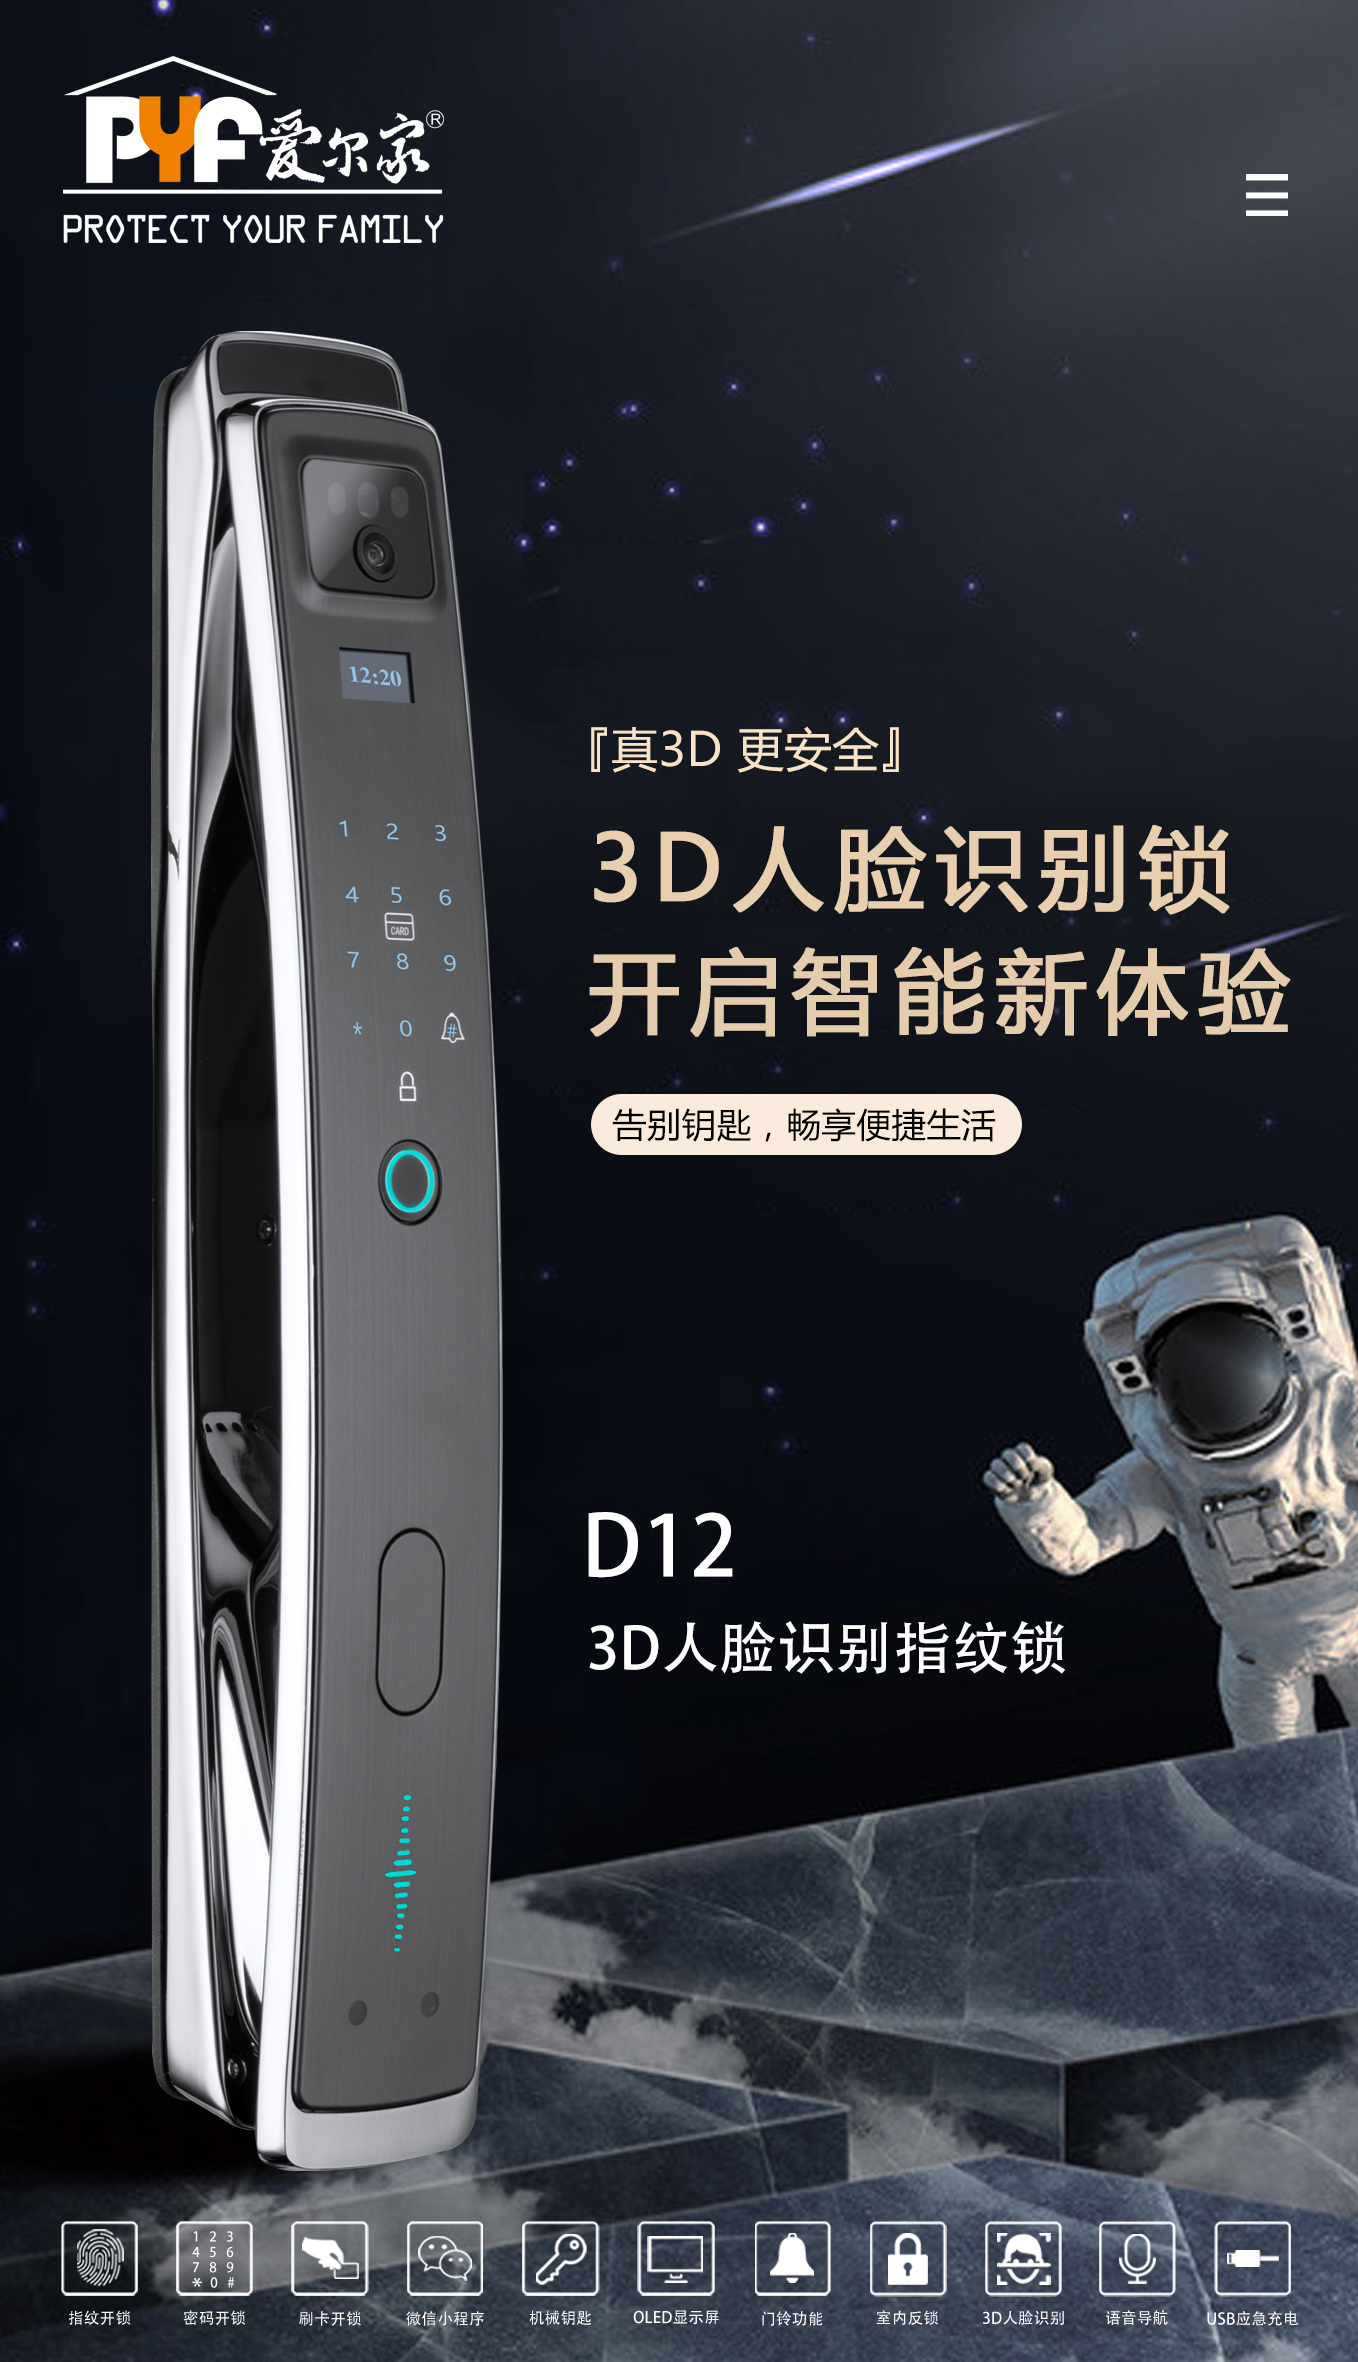 57-D12(3D人脸识别).jpg